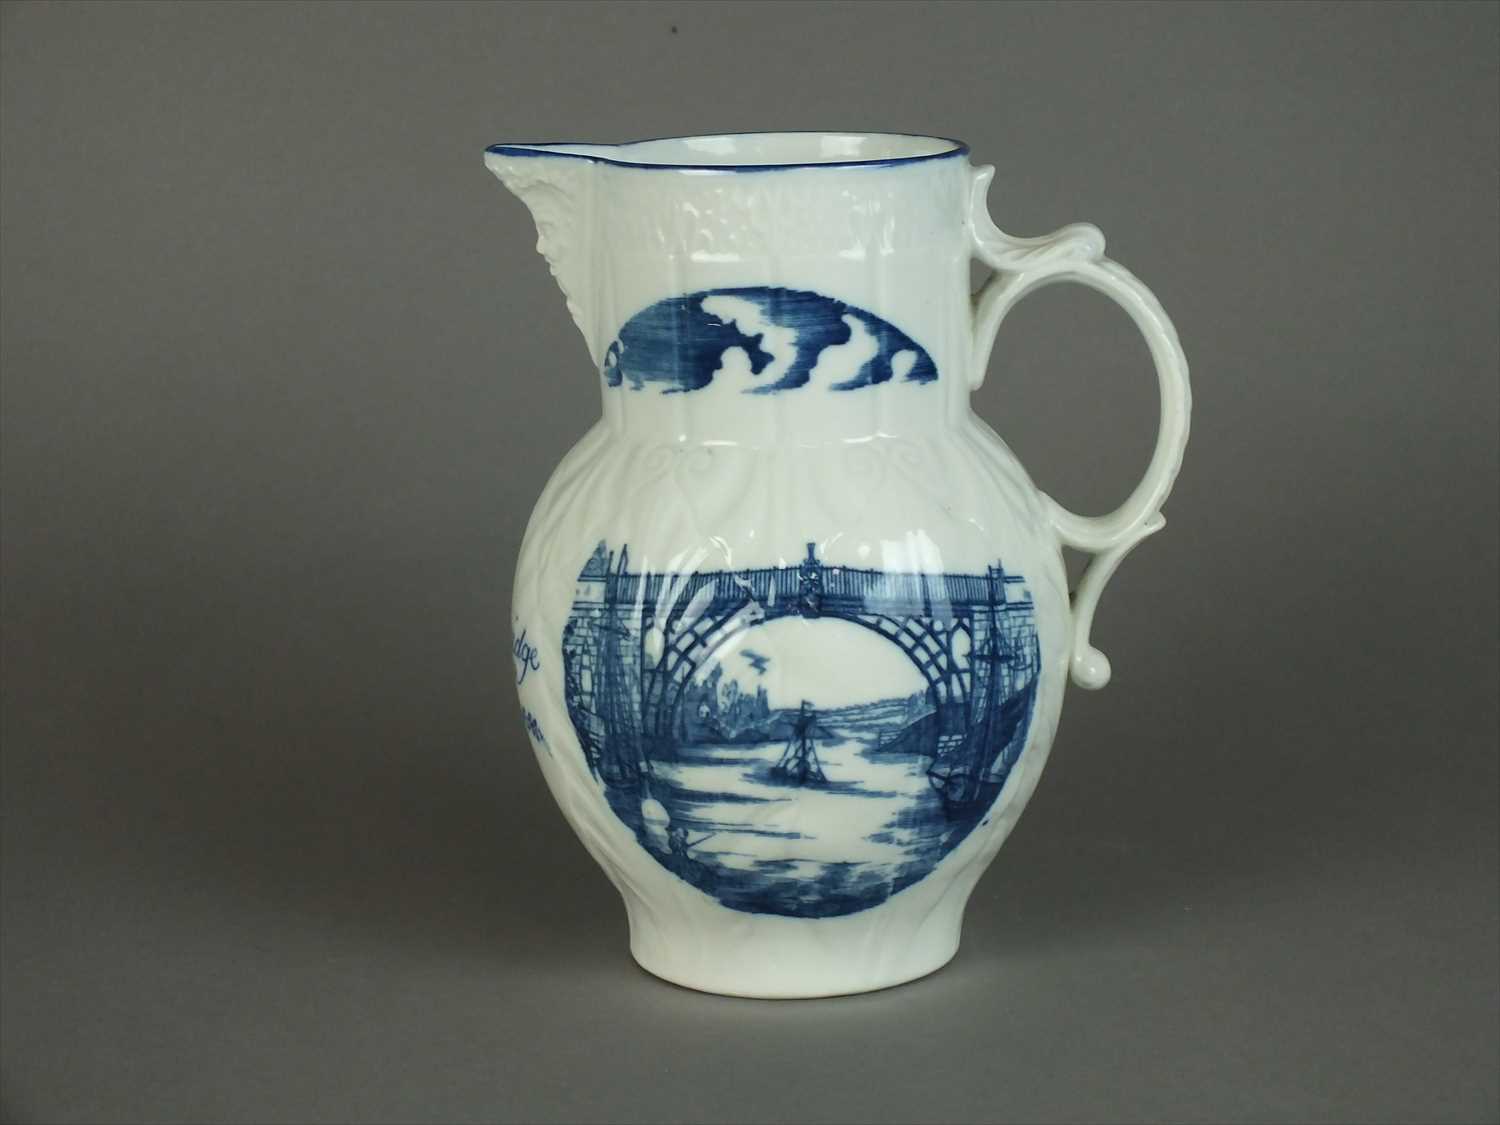 338 - Caughley jug named to 'Mr. Berridge', dated 1790